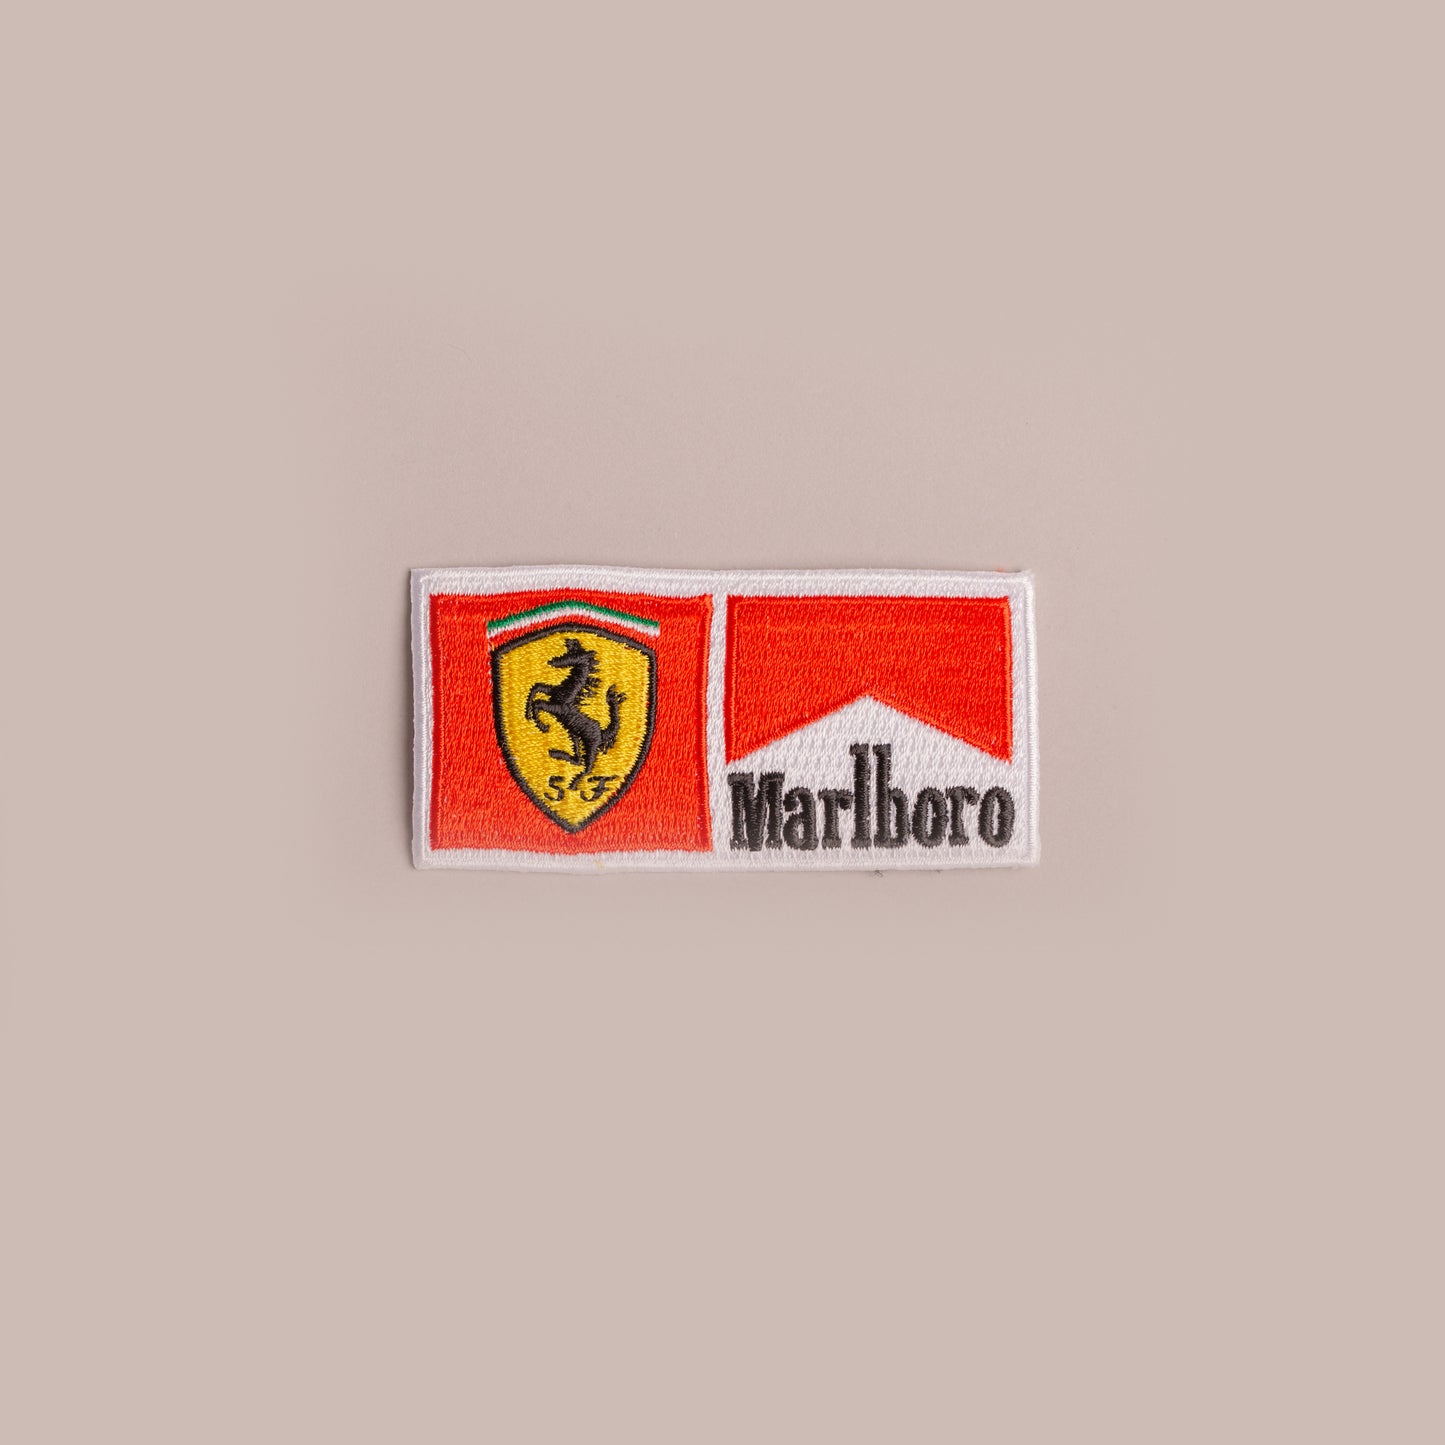 Vintage Patch - Marlboro Ferrari